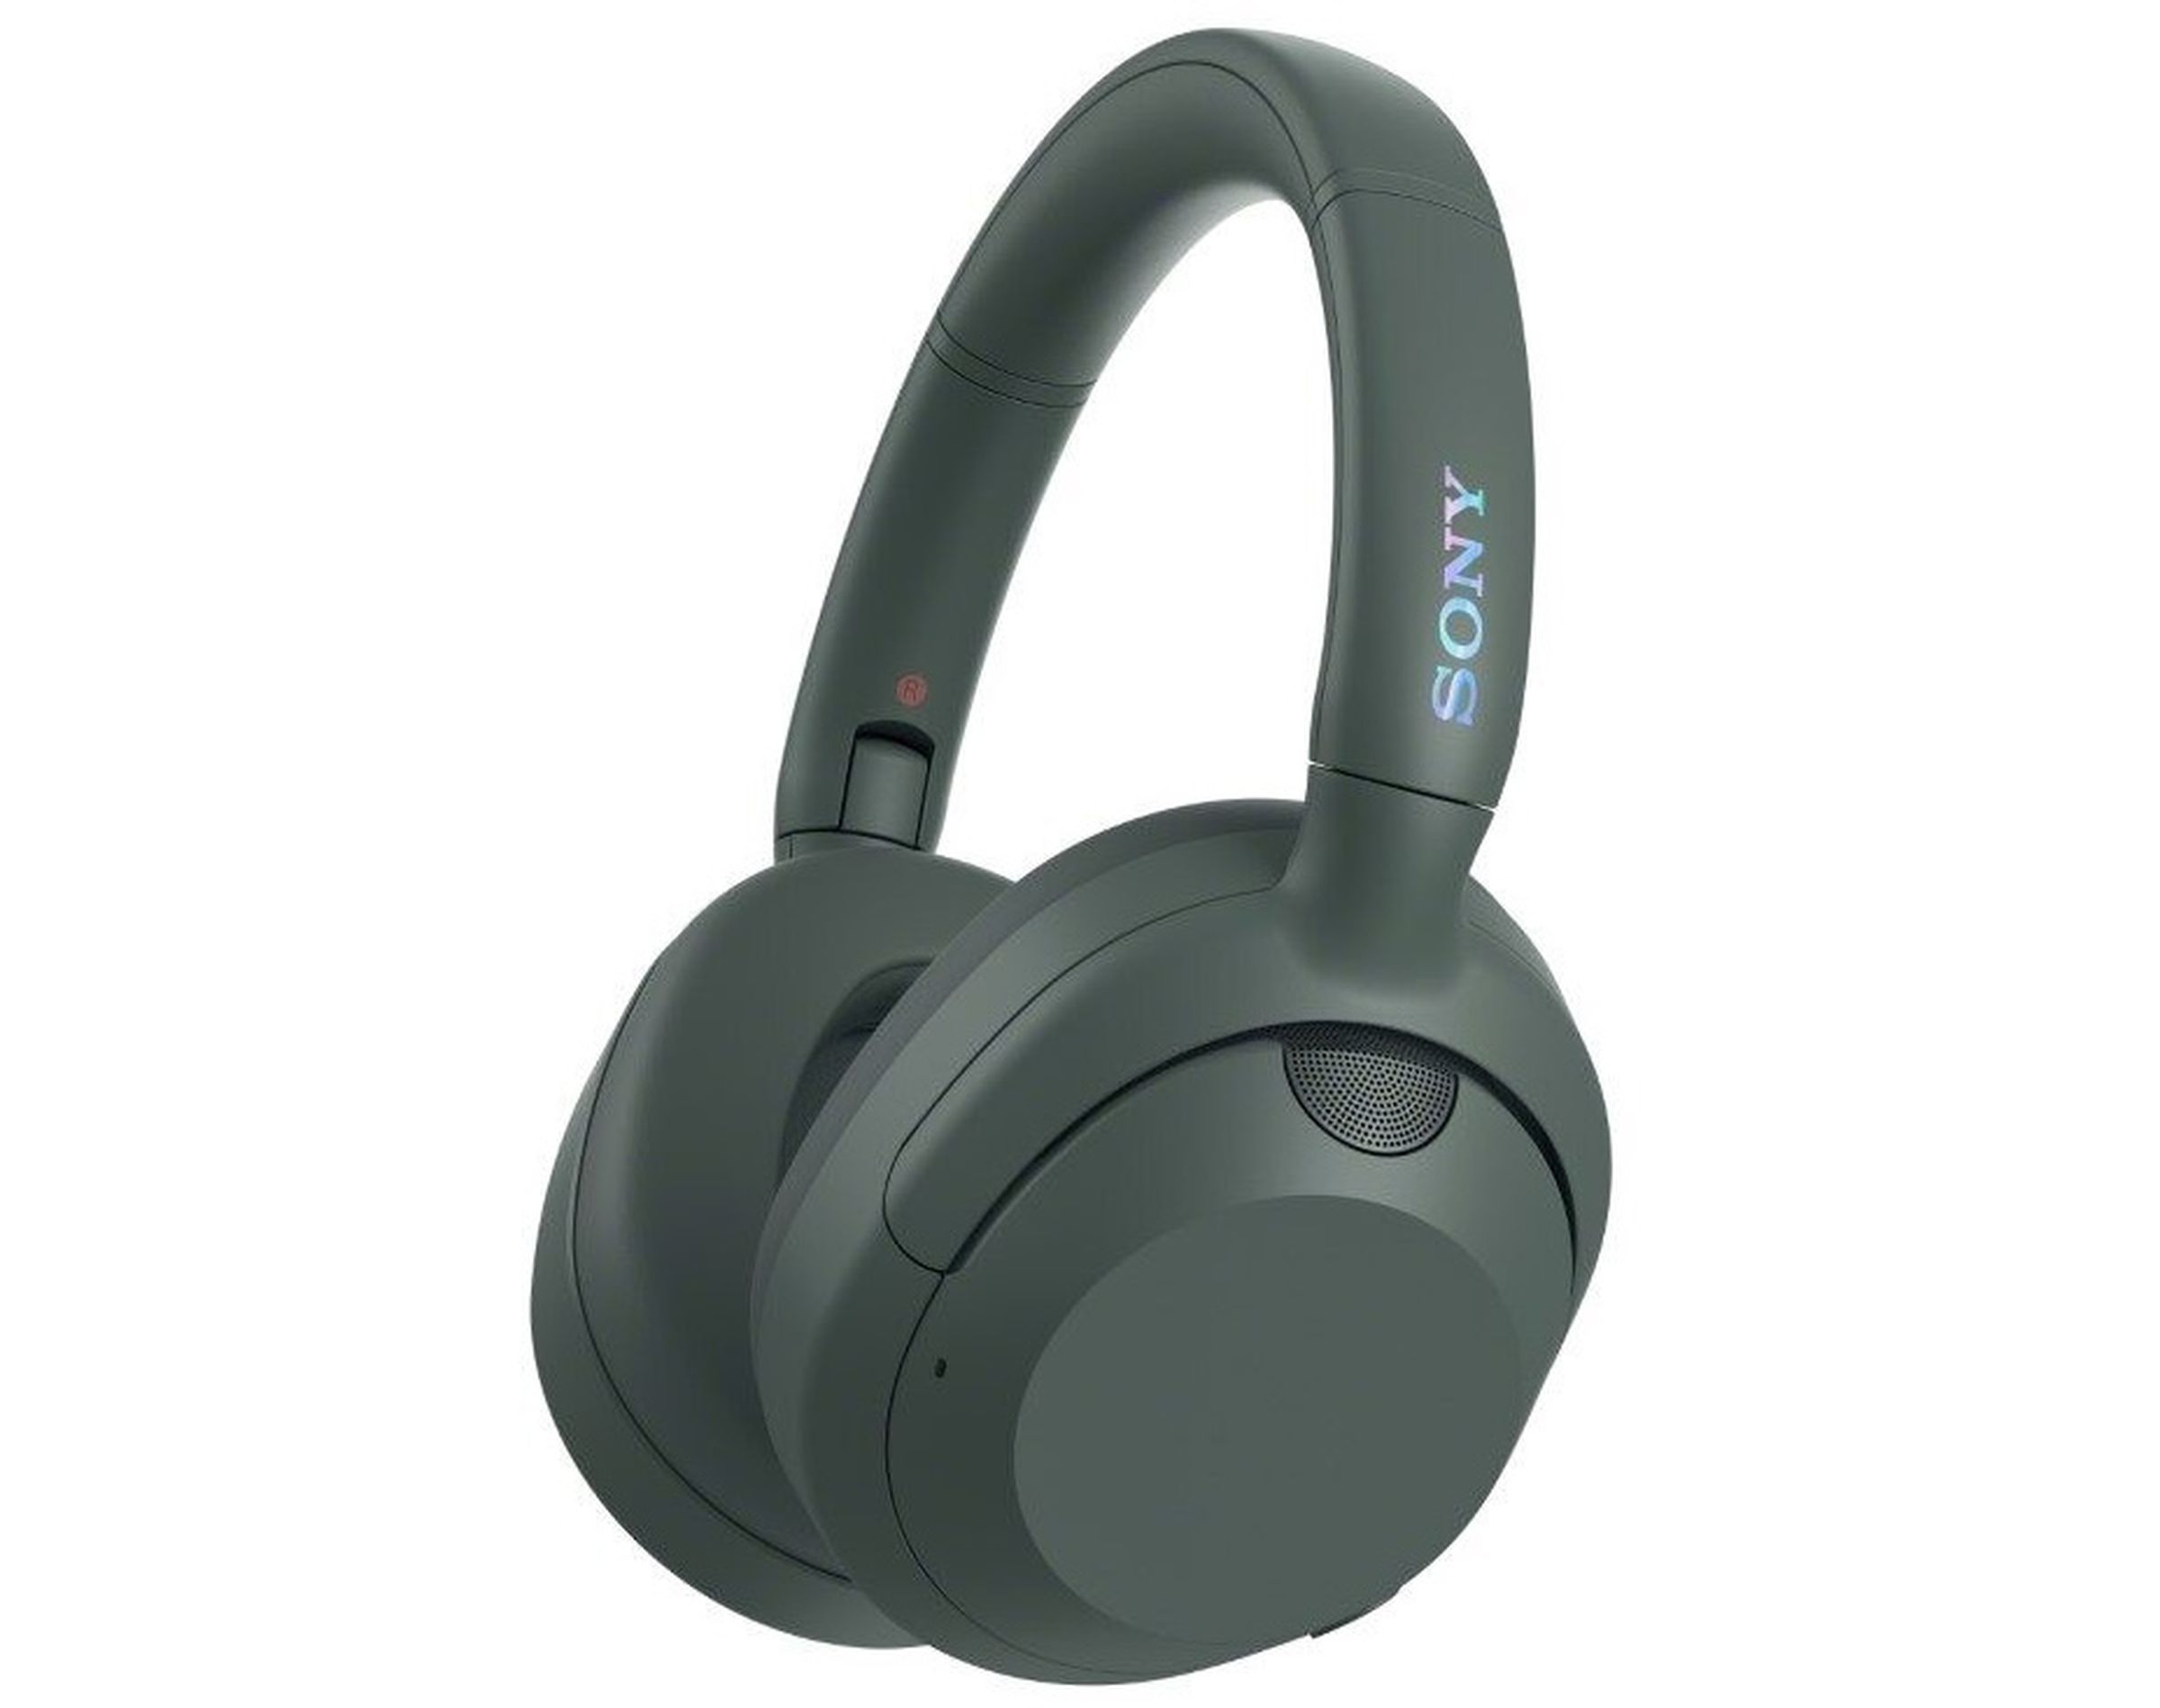 A marketing image of Sony’s ULT Wear headphones.